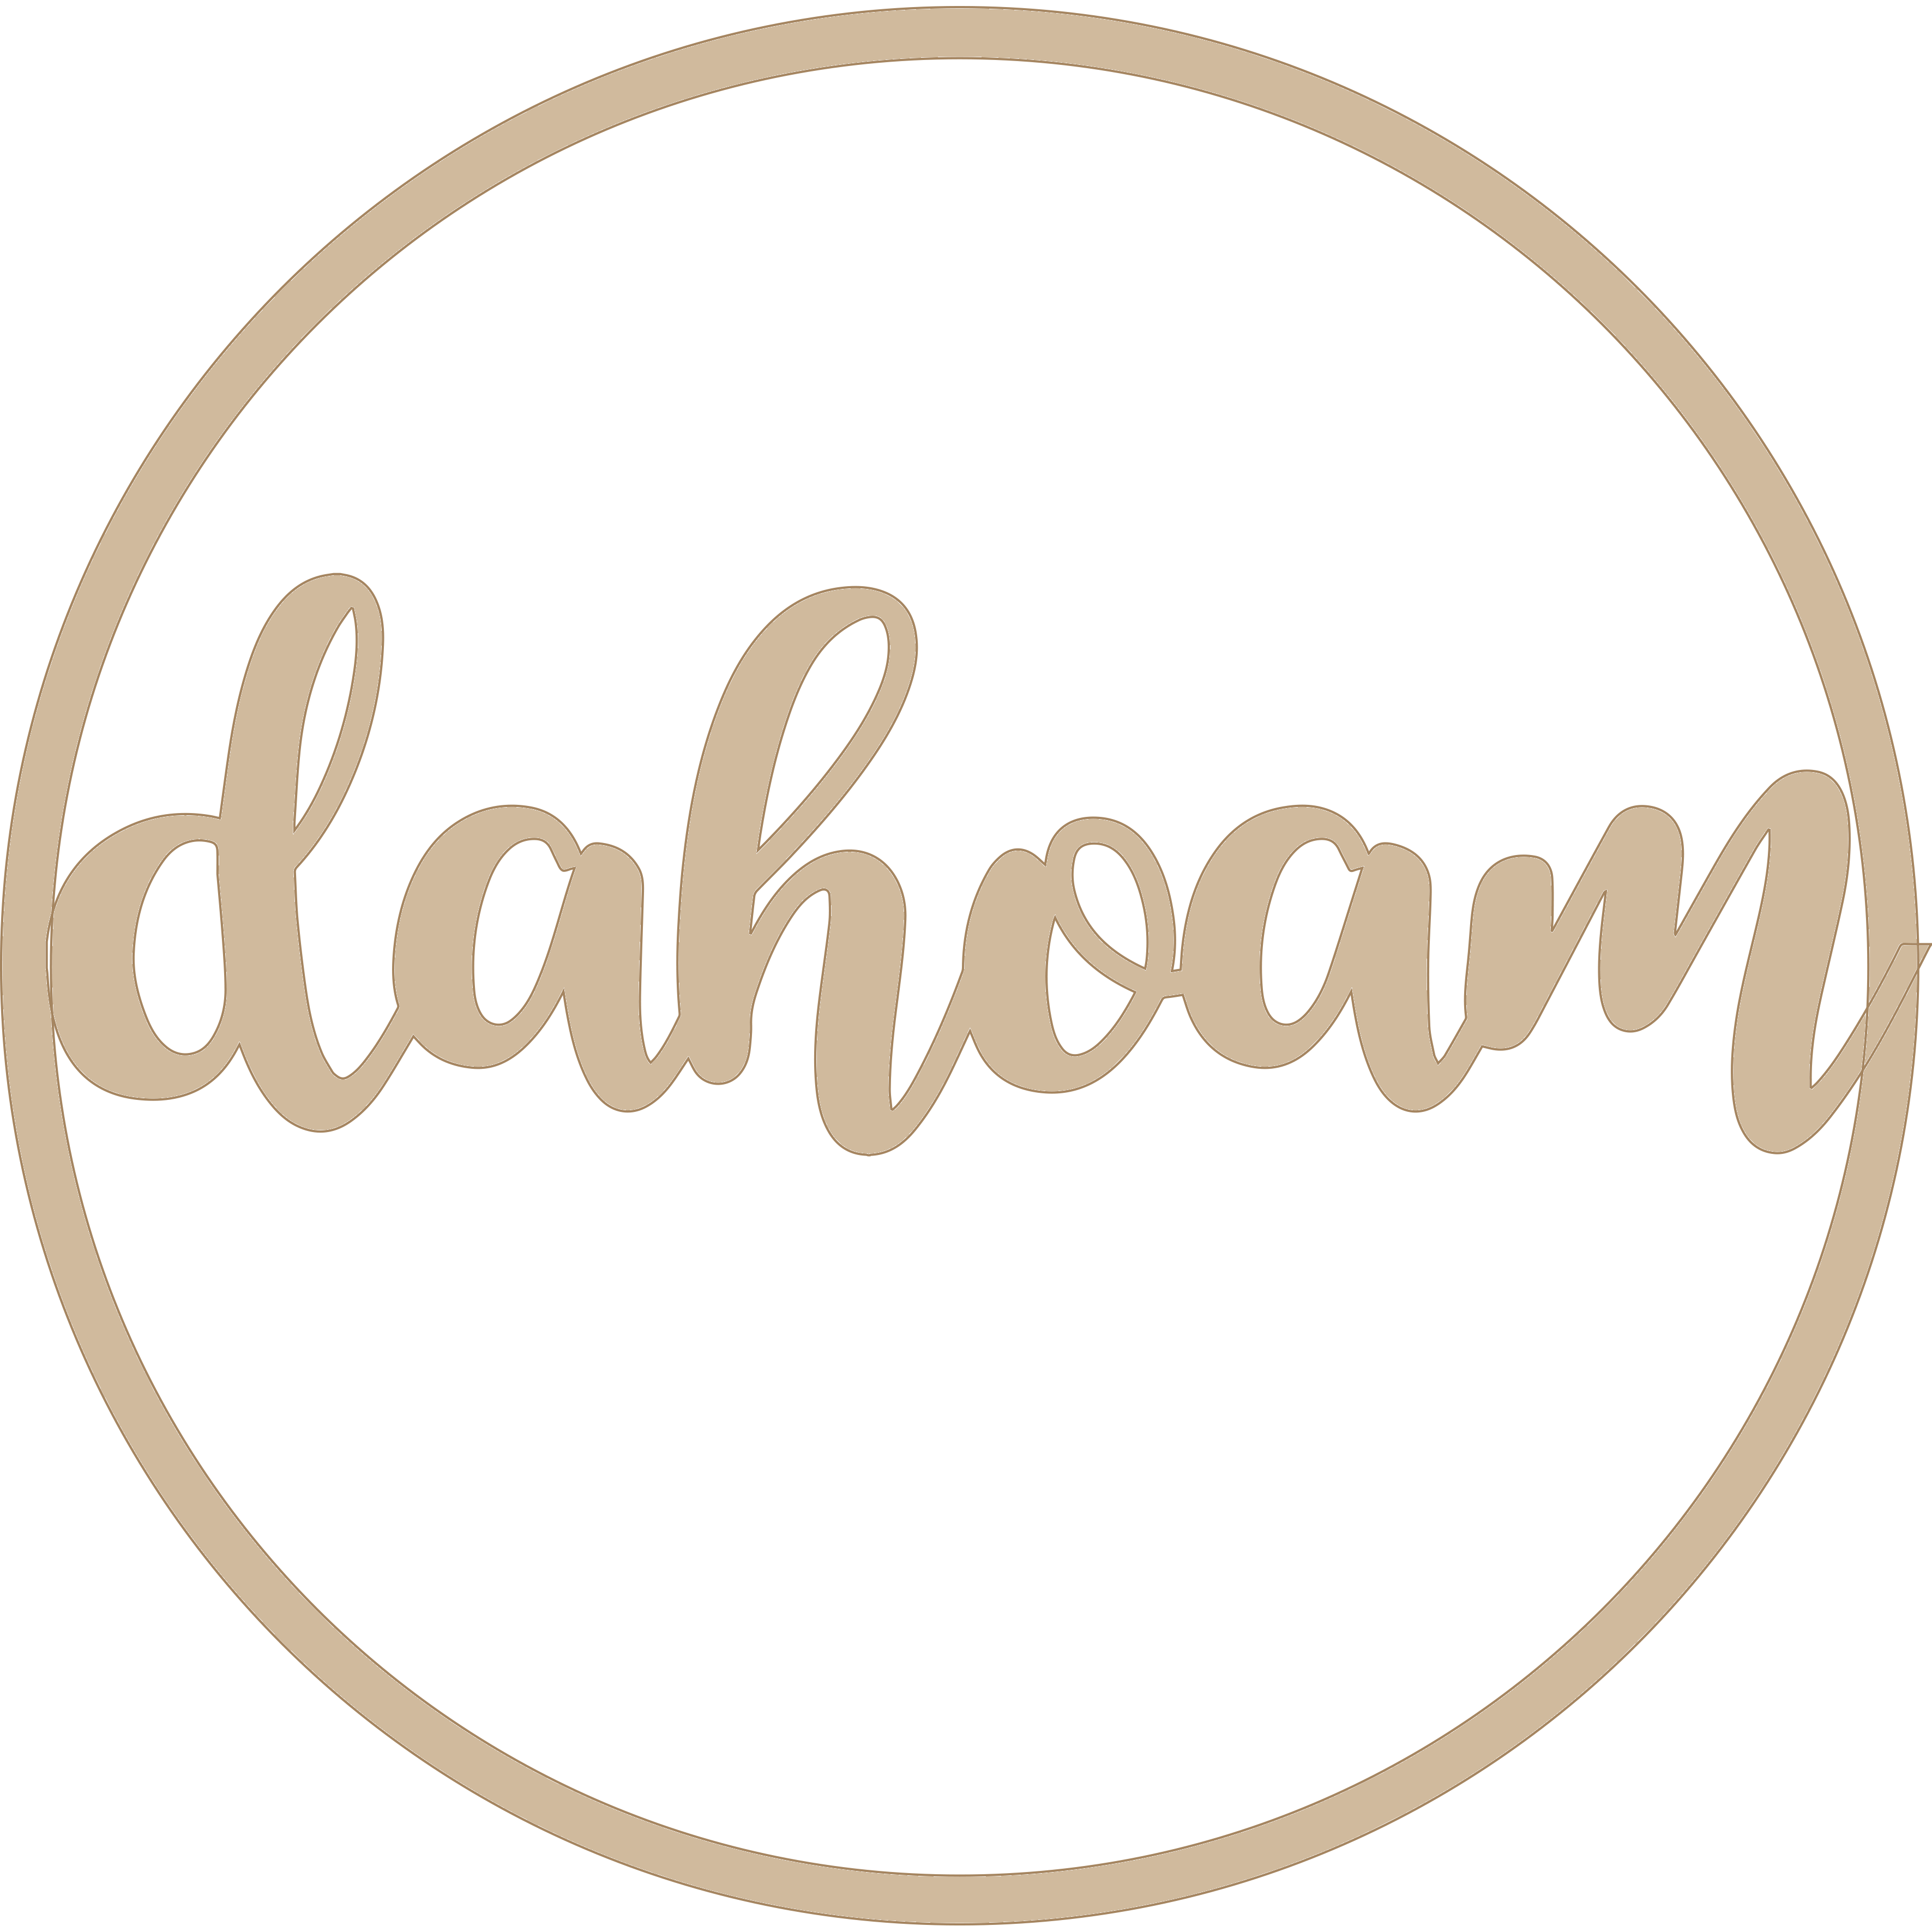 Holzgrusskarten - Holzkranz mit Schriftzug "dahoam" aus Pappelholz, Holzring, Tür, Deko, Geschenk